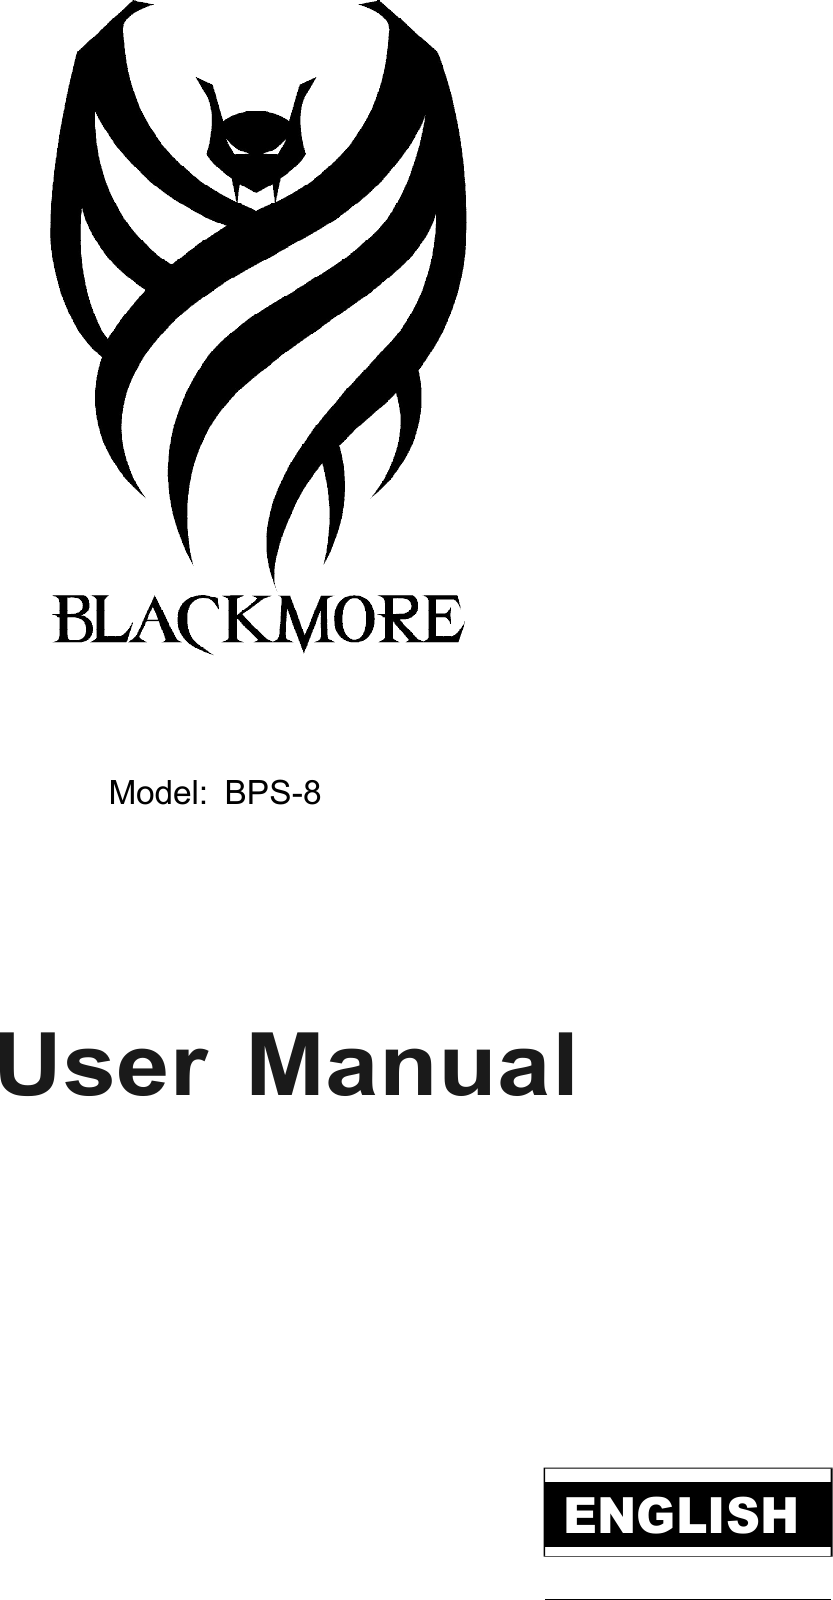        Model:  BPS-8           User Manual                     ENGLISH    